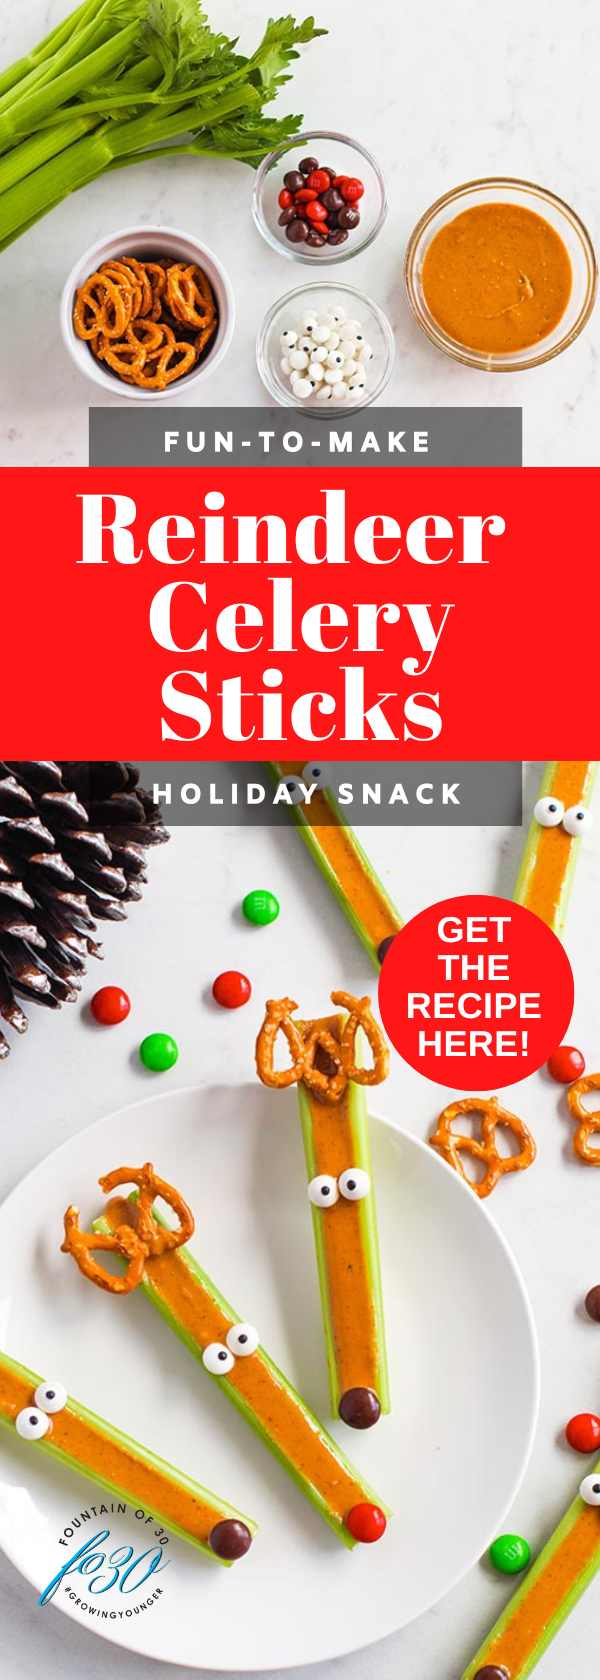 holiday reindeer celery sticks fountainof30